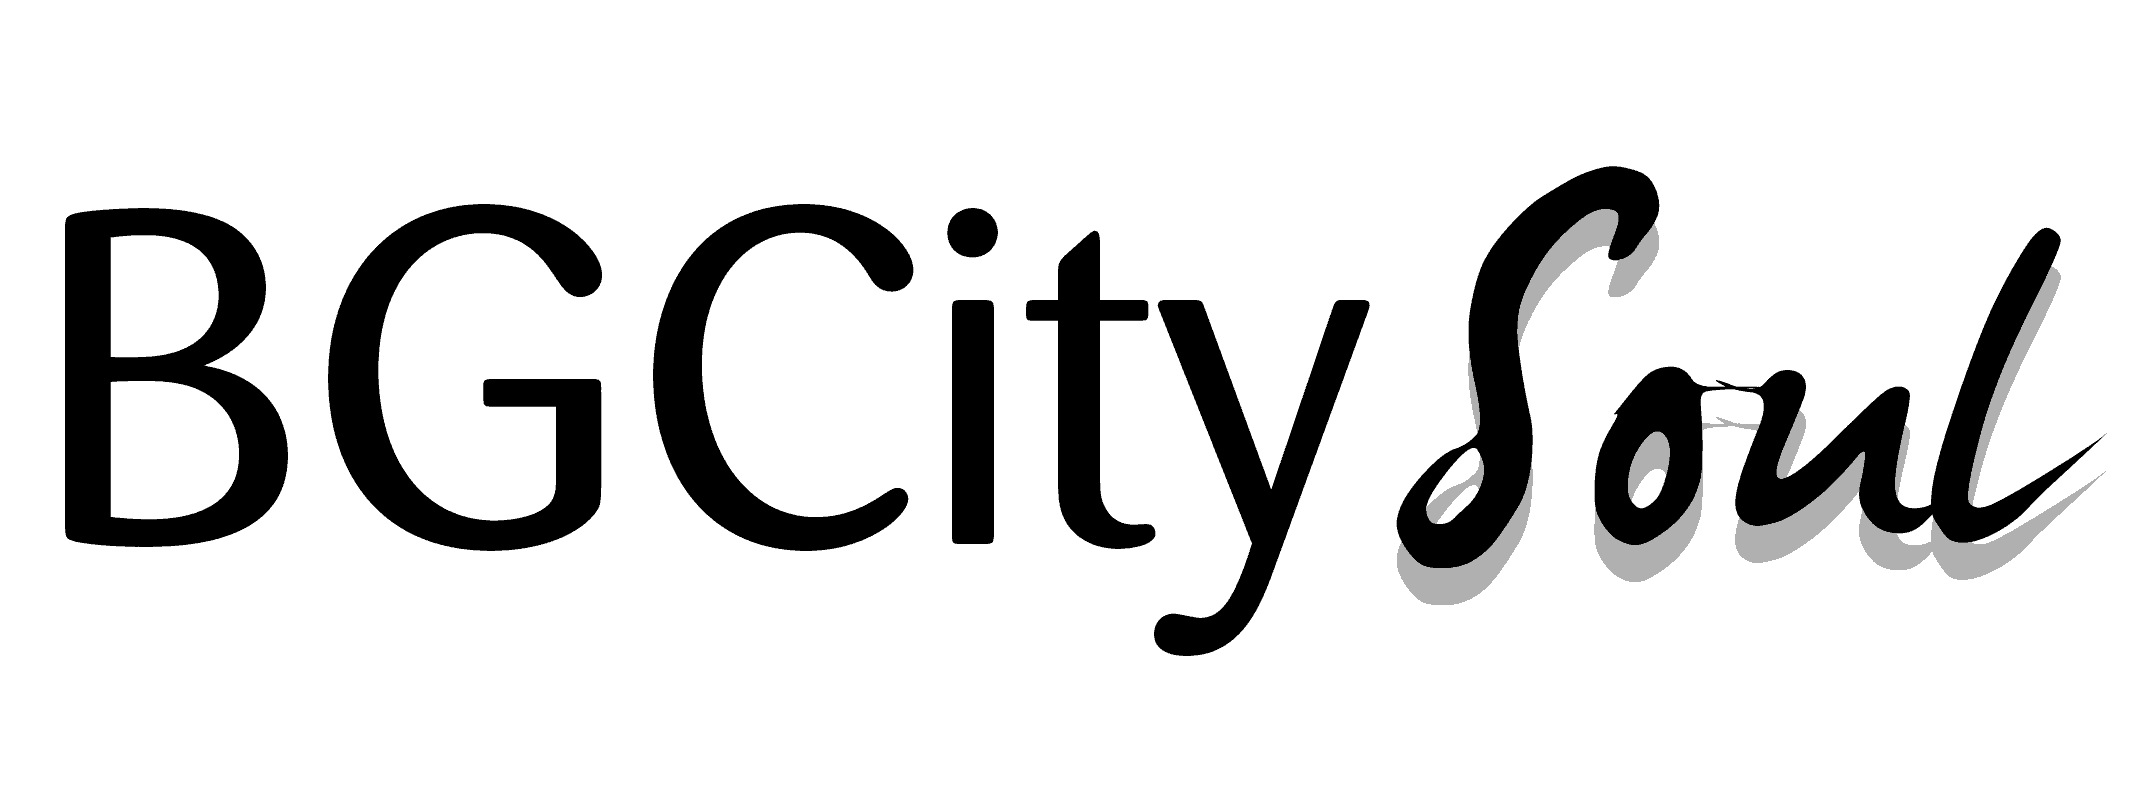 The logo for bonifacio global city.